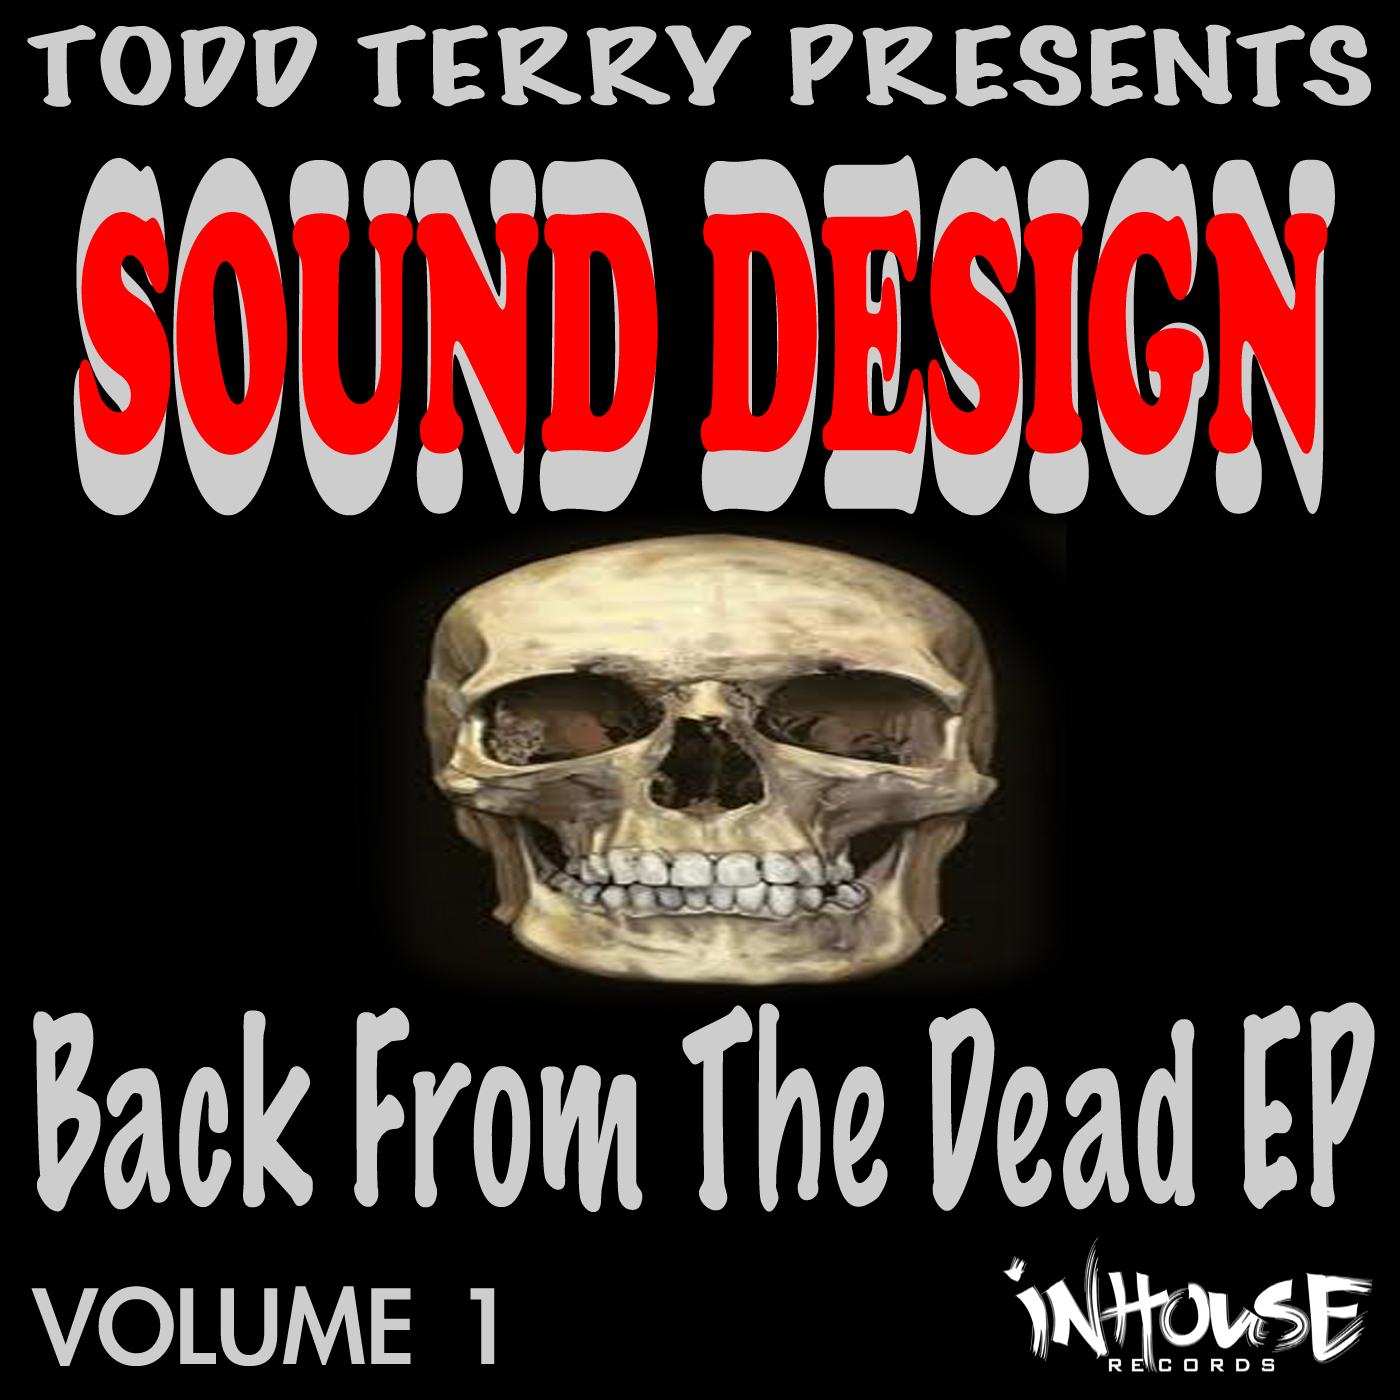 Todd Terry Presents Sound Design - Back From The Dead E.P. Vol 1